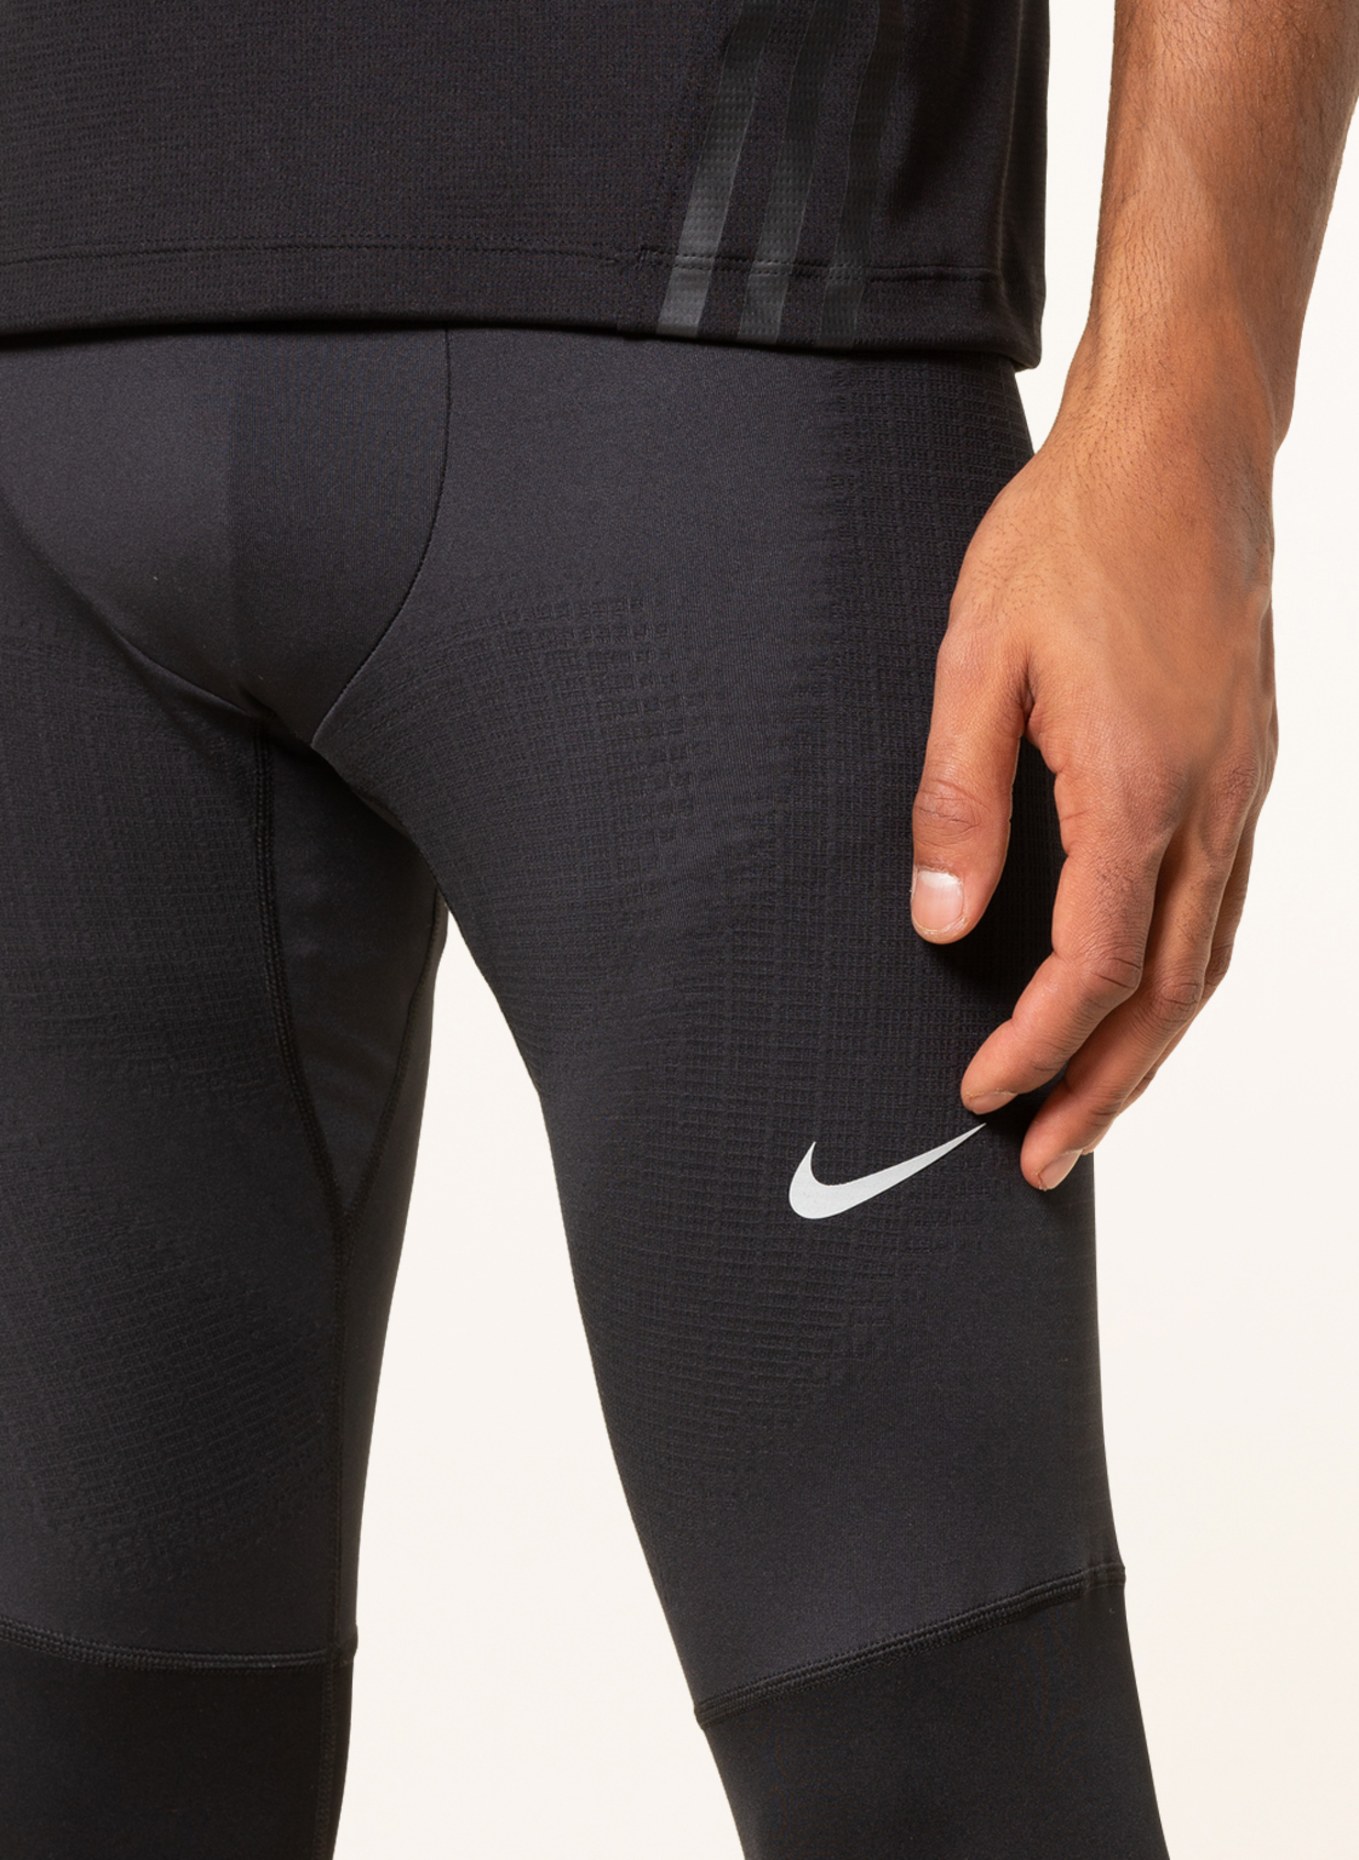 Nike Running tights PHENOM ELITE in black